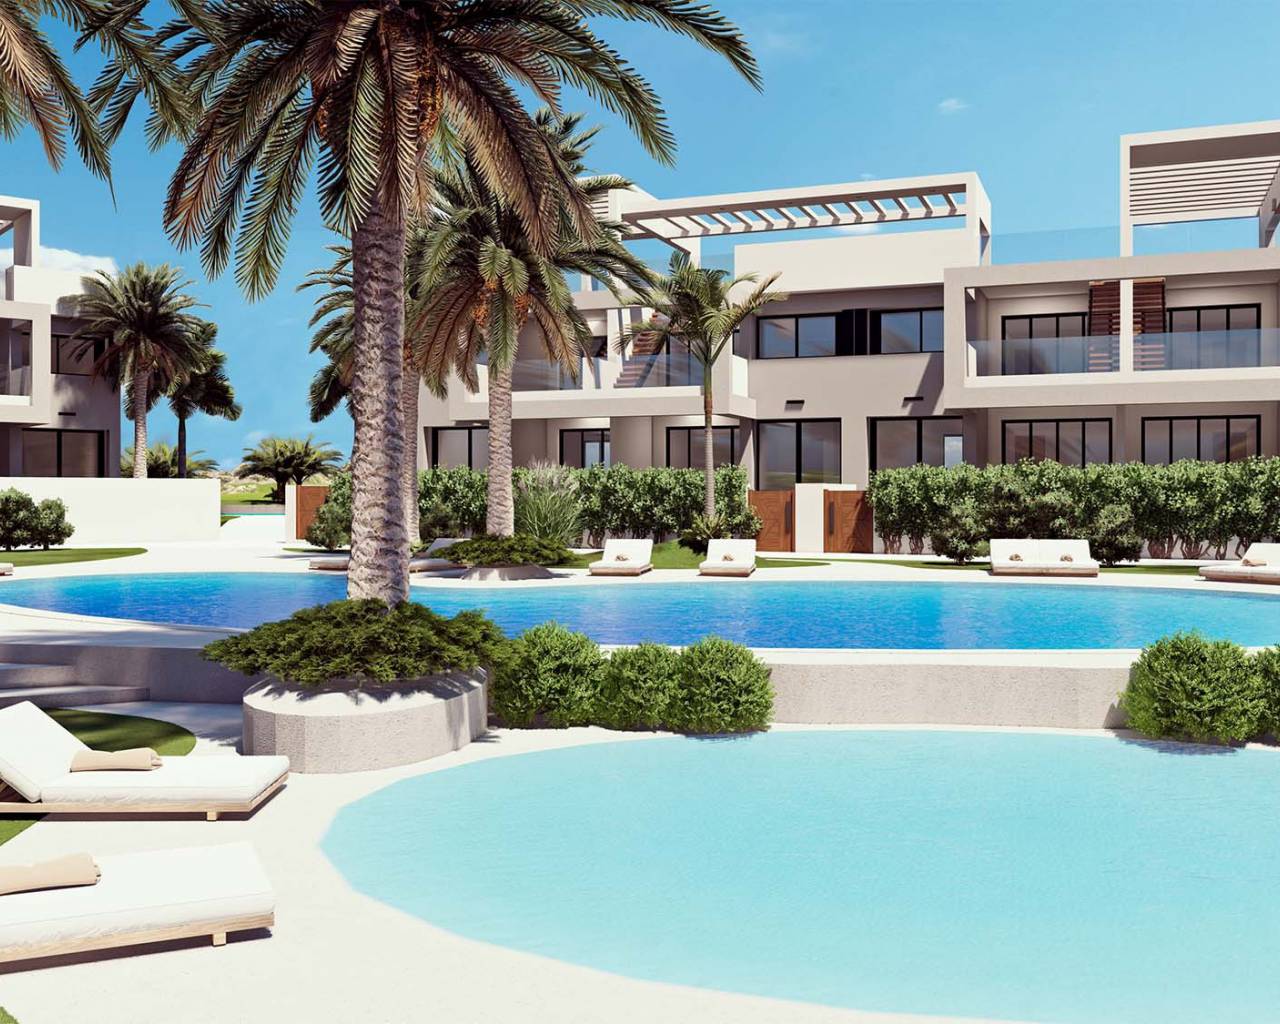 Apartemento moderno con piscina en venta en Torrevieja, Alicante